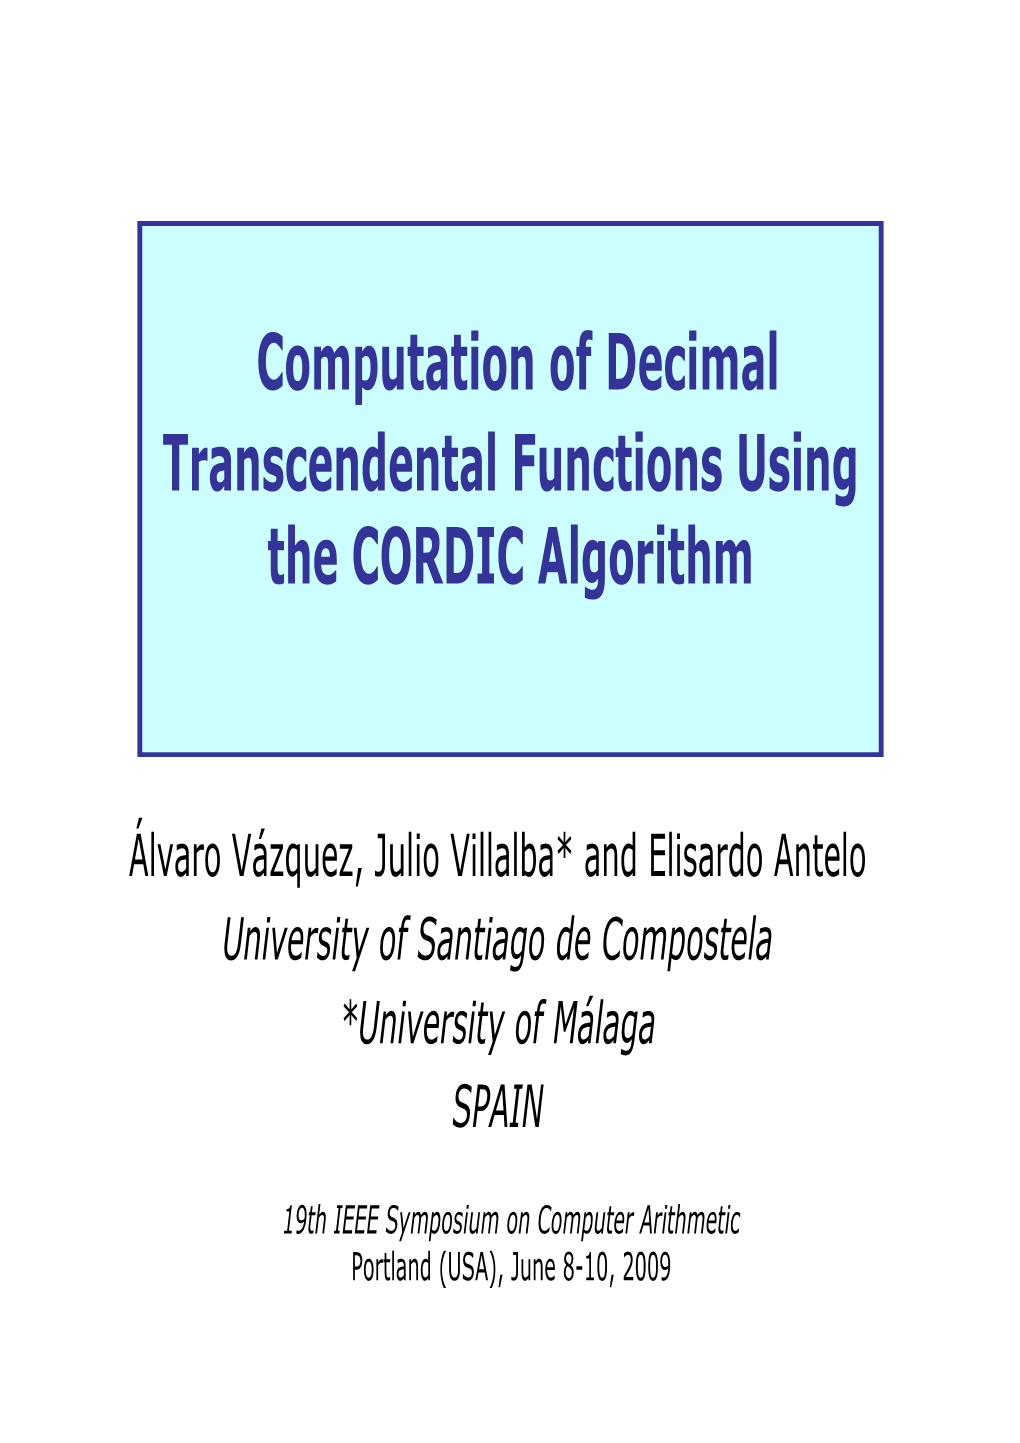 Computation of Decimal Transcendental Functions Using the CORDIC Algorithm